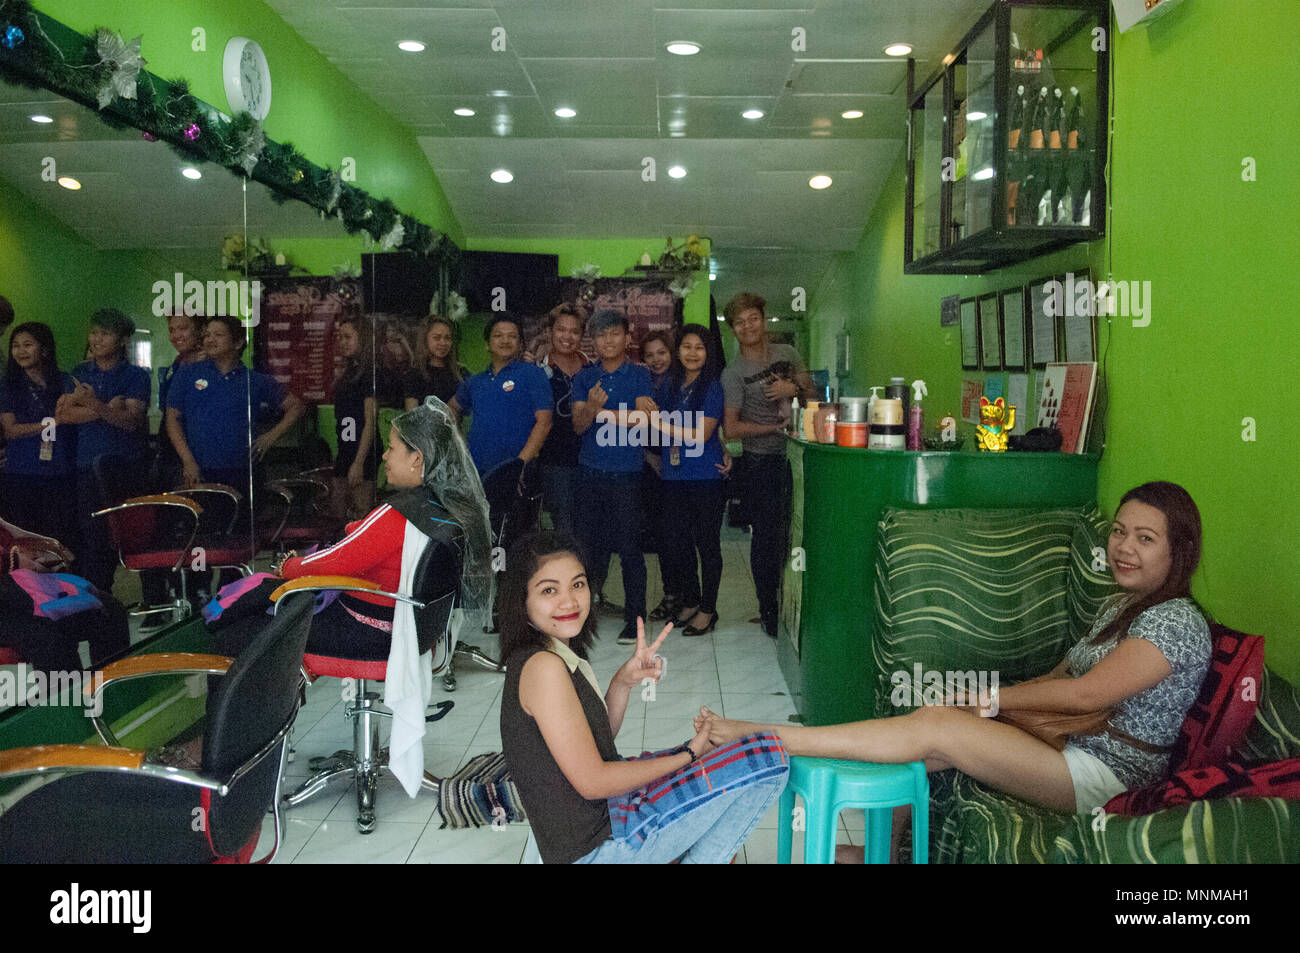 Salon de coiffure, Malaybalay, Bukidnon, Philippines Banque D'Images